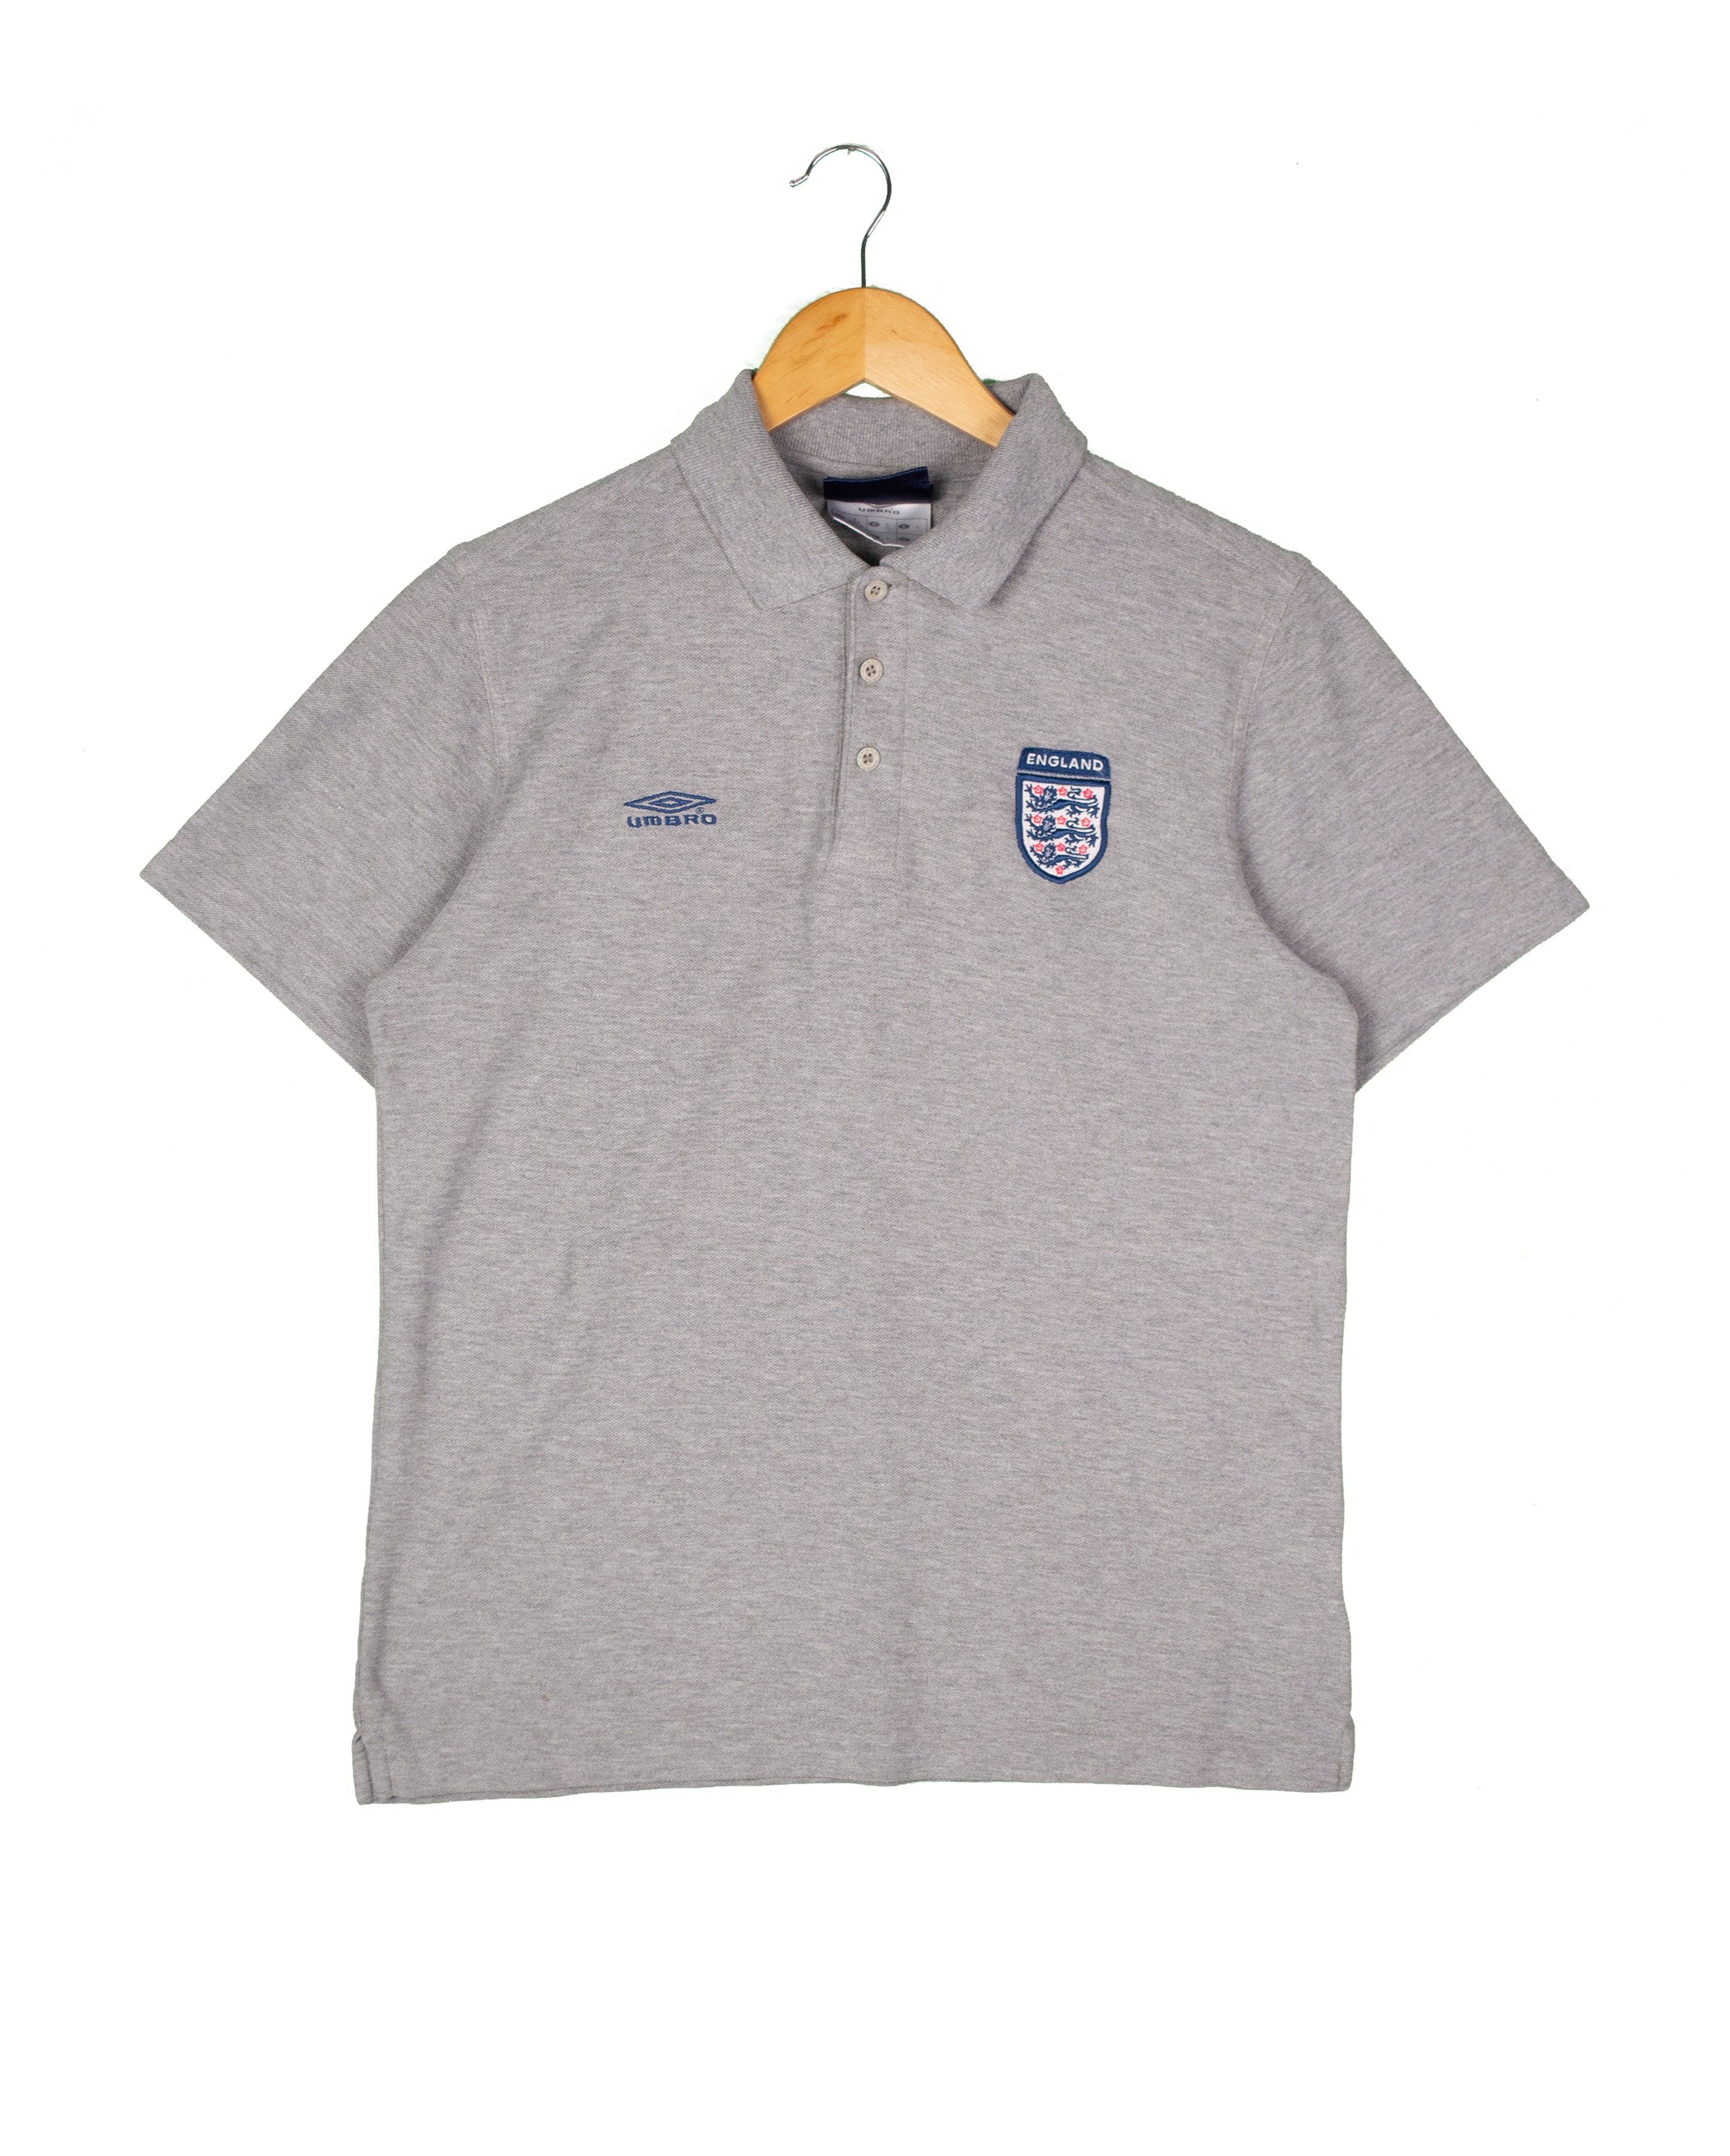 England Polo Shirt - S - #1551